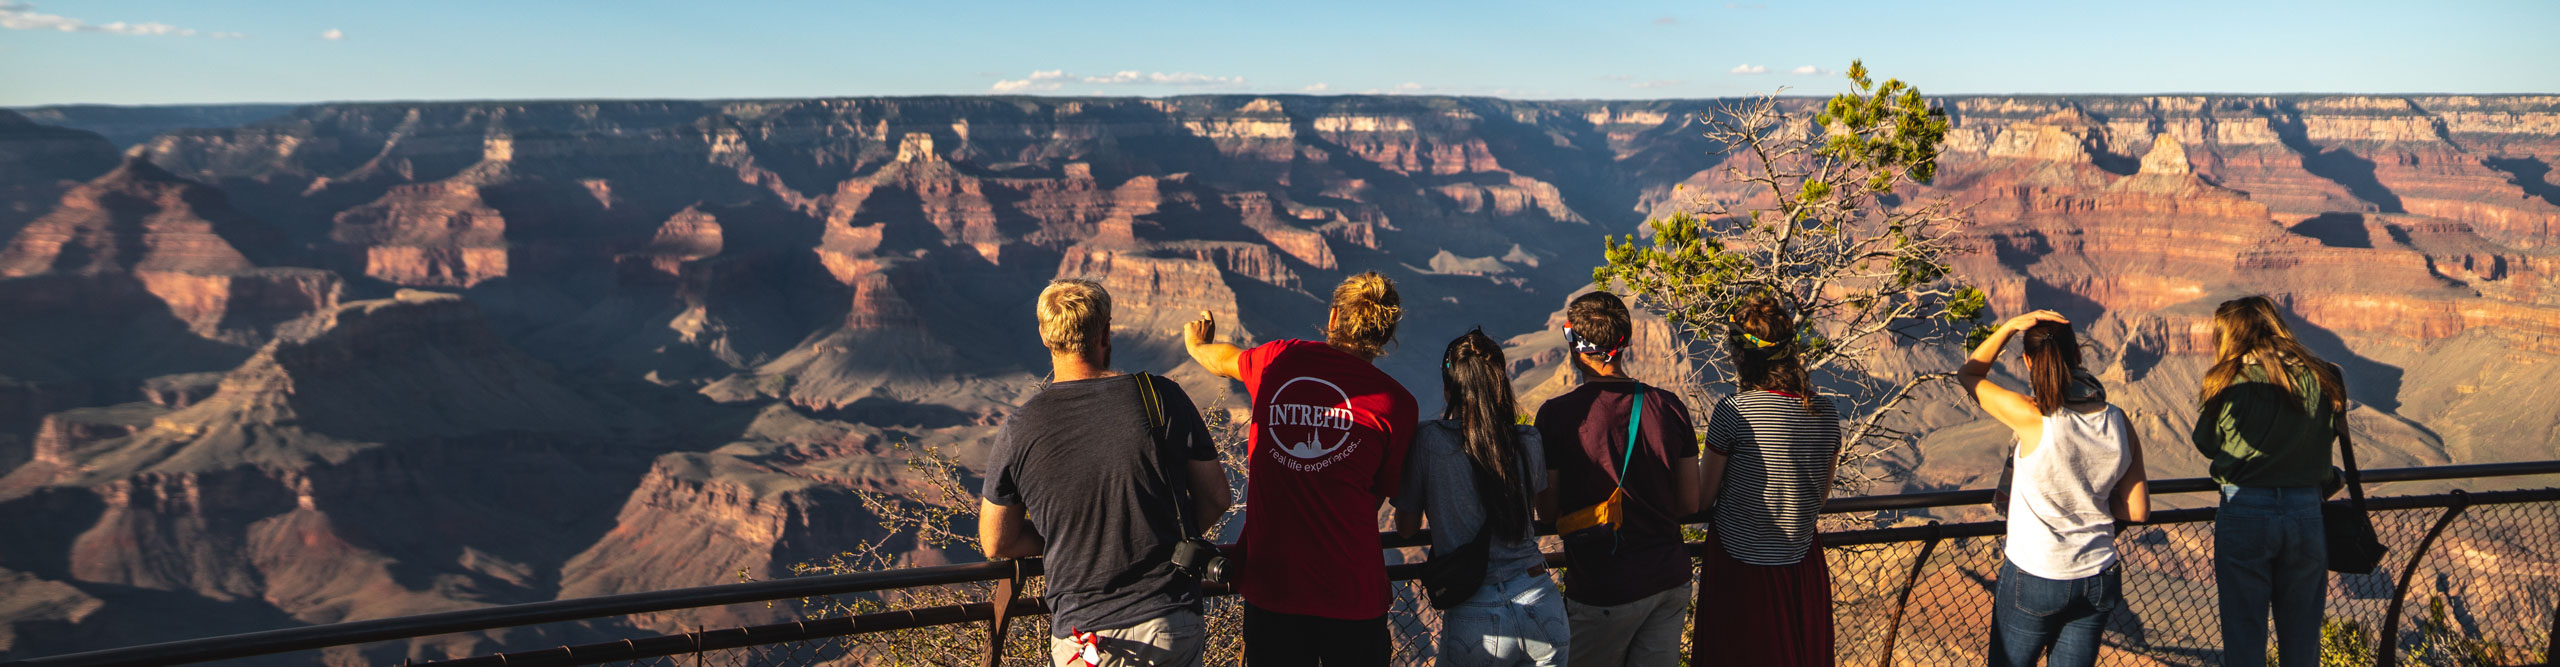  Group looking at view of Grand Canyon at the sun is setting, Arizona, USA